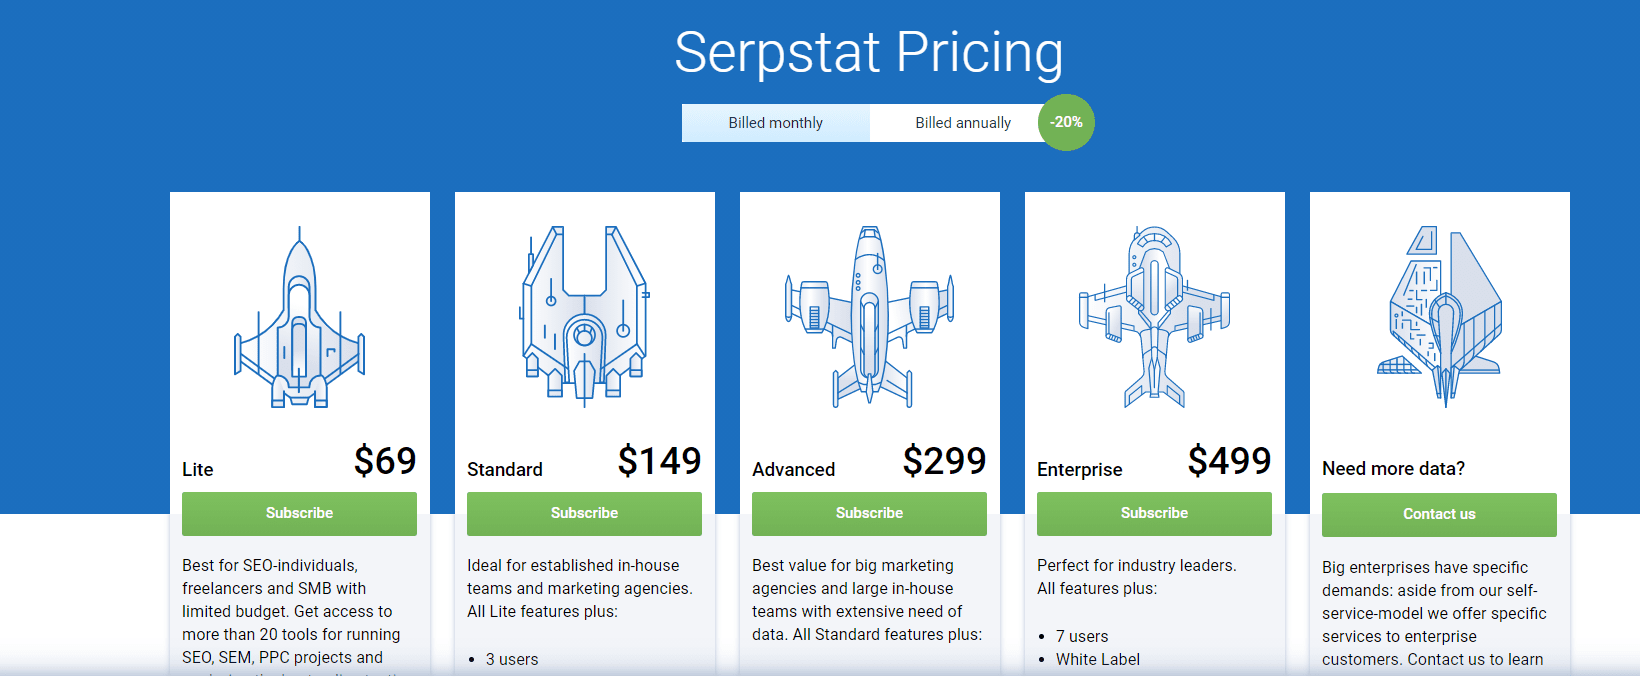 Serpstat-Pricing